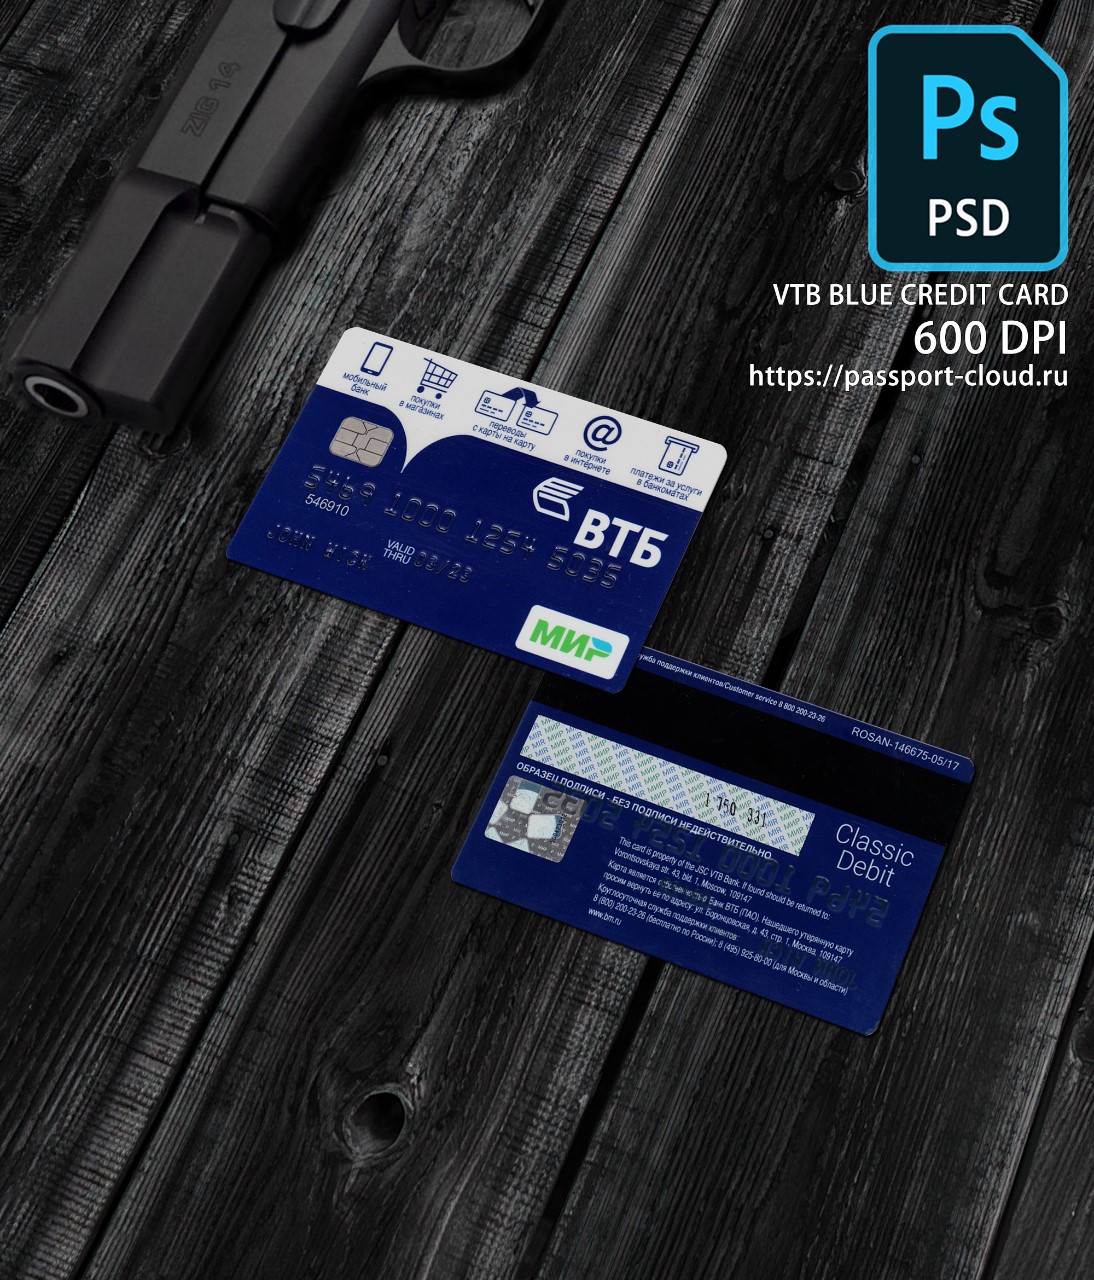 VTB Blue Credit Card PSD1